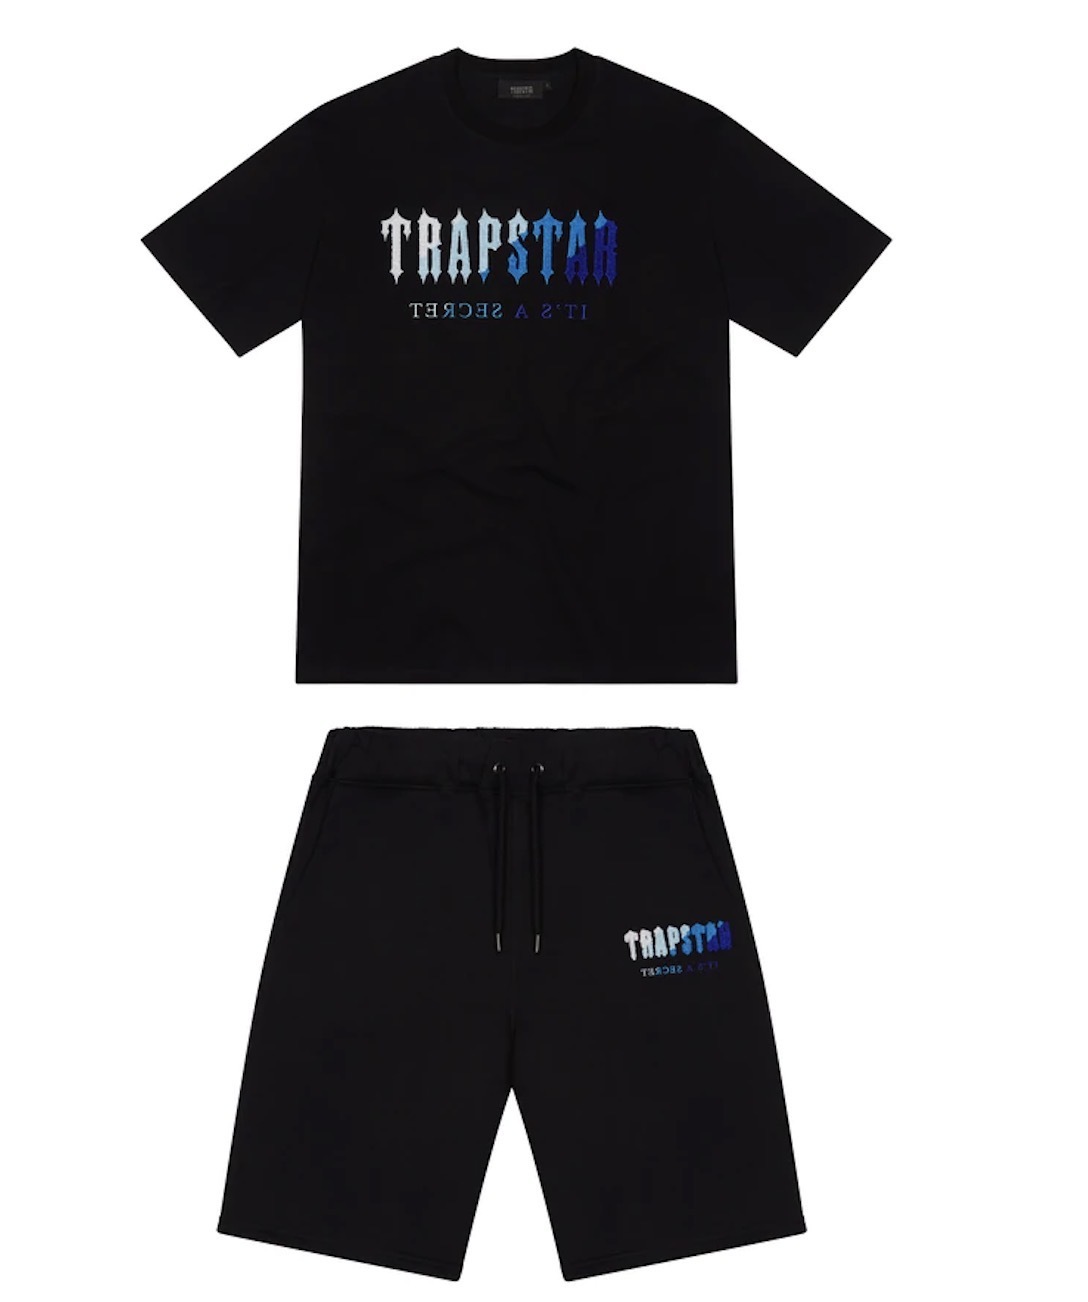 Herren Trapstar T-Shirt Kurzarm Print Outfit Chenille Trainingsanzug Schwarz Baumwolle London Streetwear S-2XL